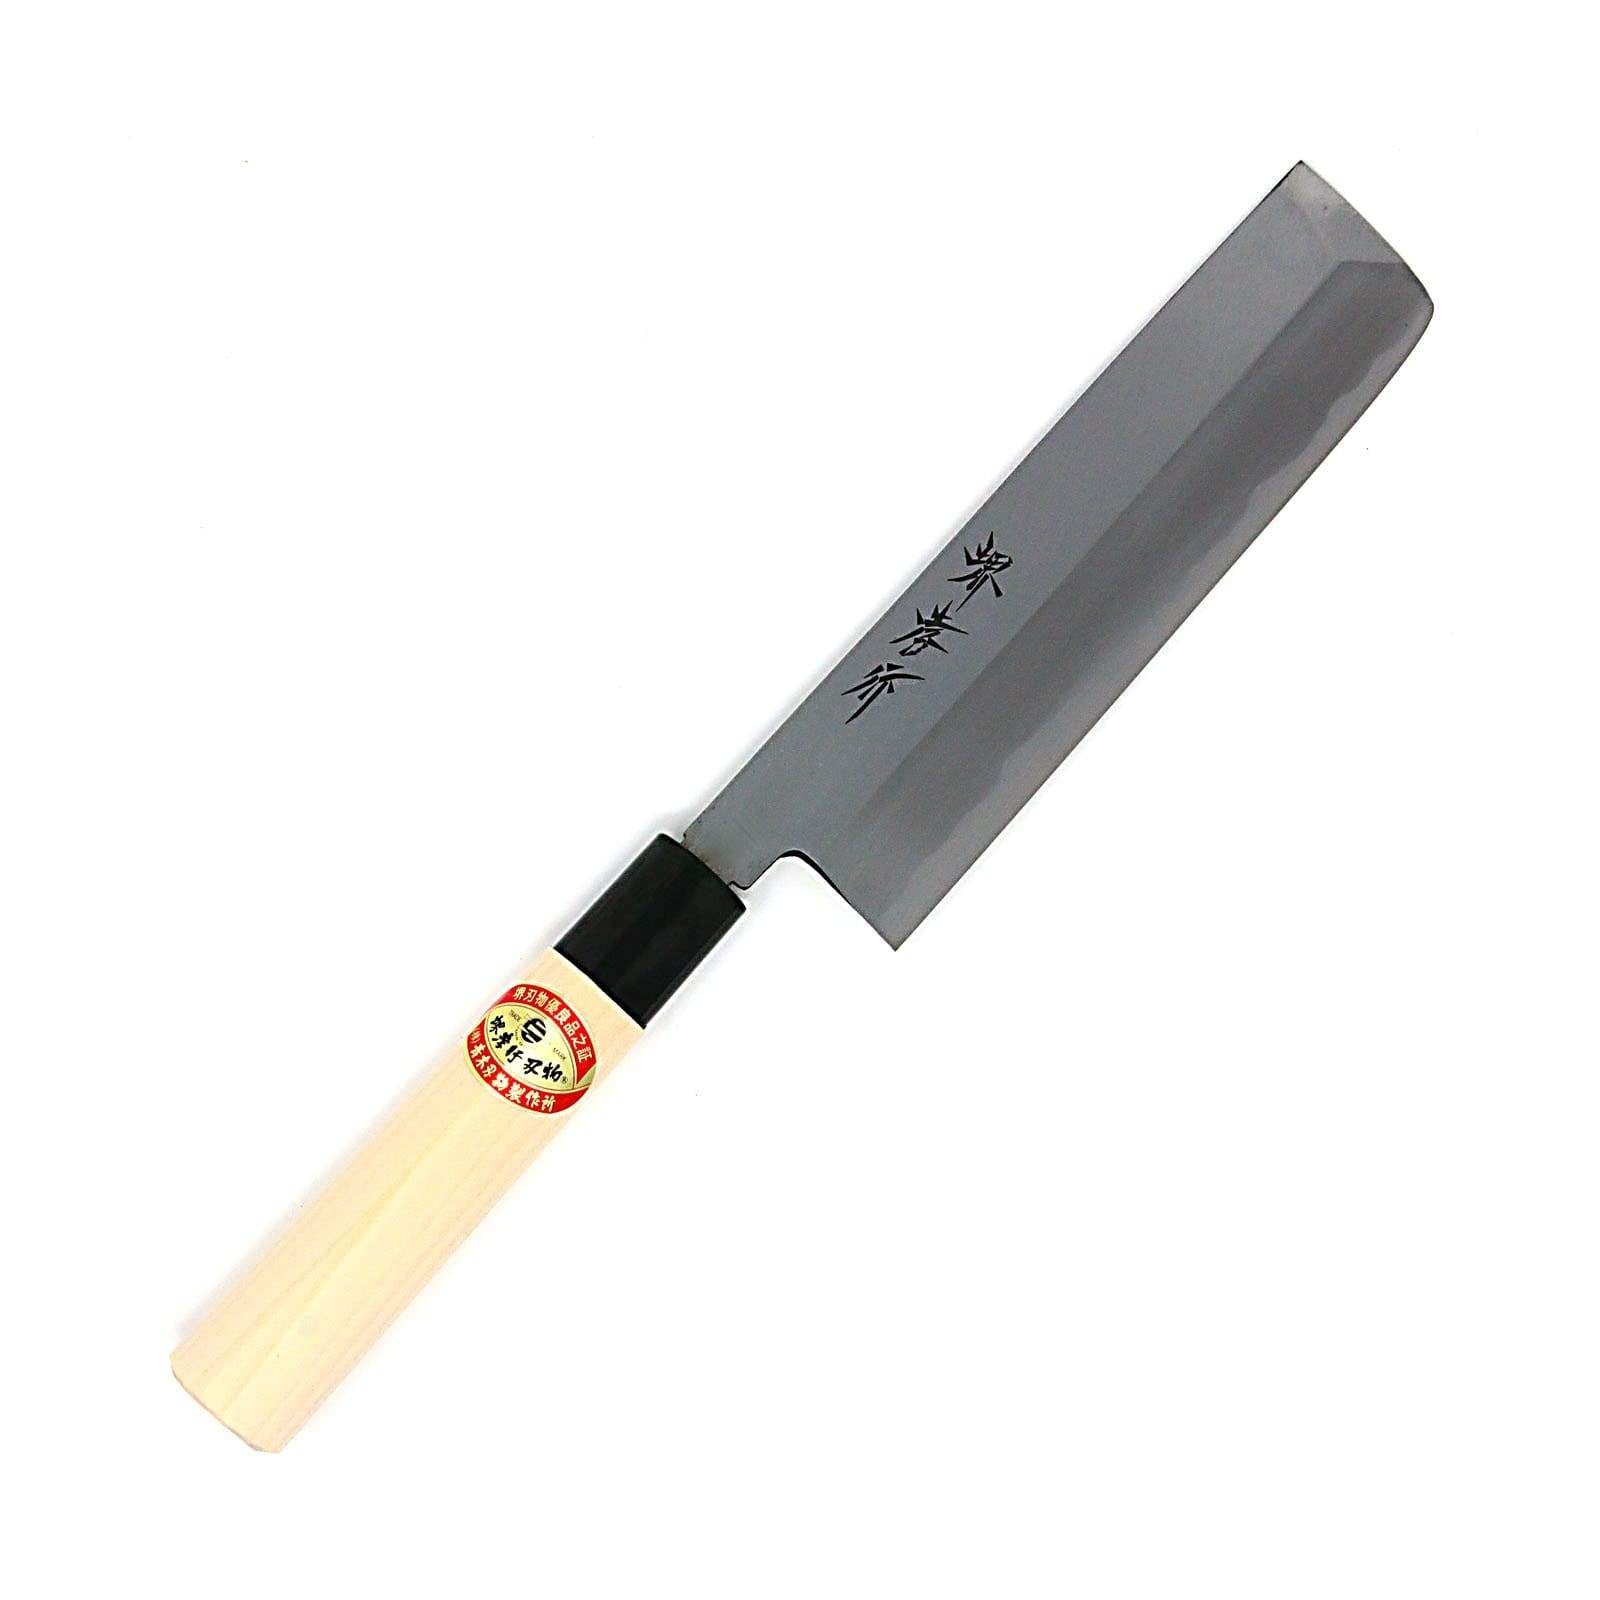 https://cdn.shopify.com/s/files/1/1610/3863/products/sakai-takayuki-kasumitogi-shirogami-carbon-steel-usuba-knife-usuba-knives-4490589667411_1600x.jpg?v=1564030455